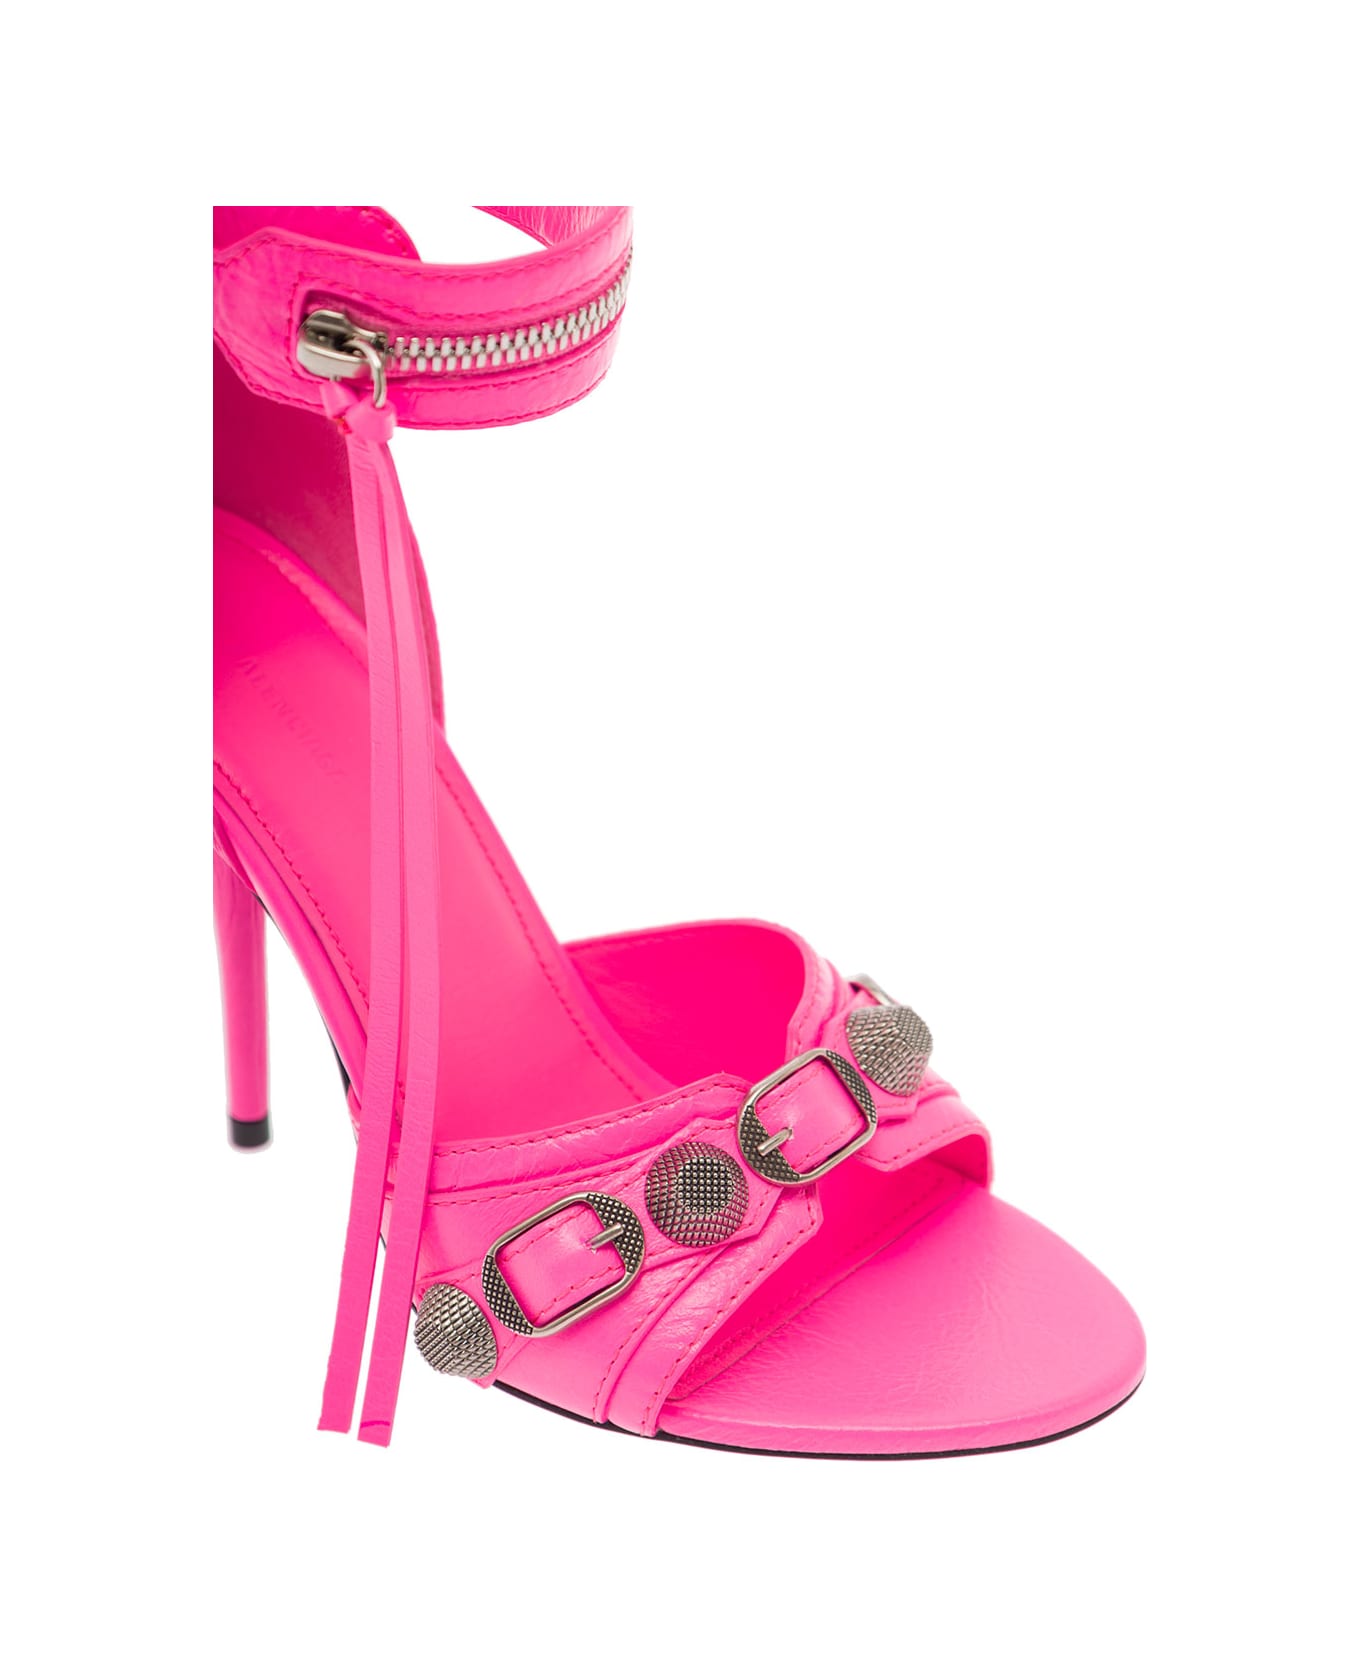 Balenciaga Cagole Sandal H110
Arena/abs Accessory - Fluo pink